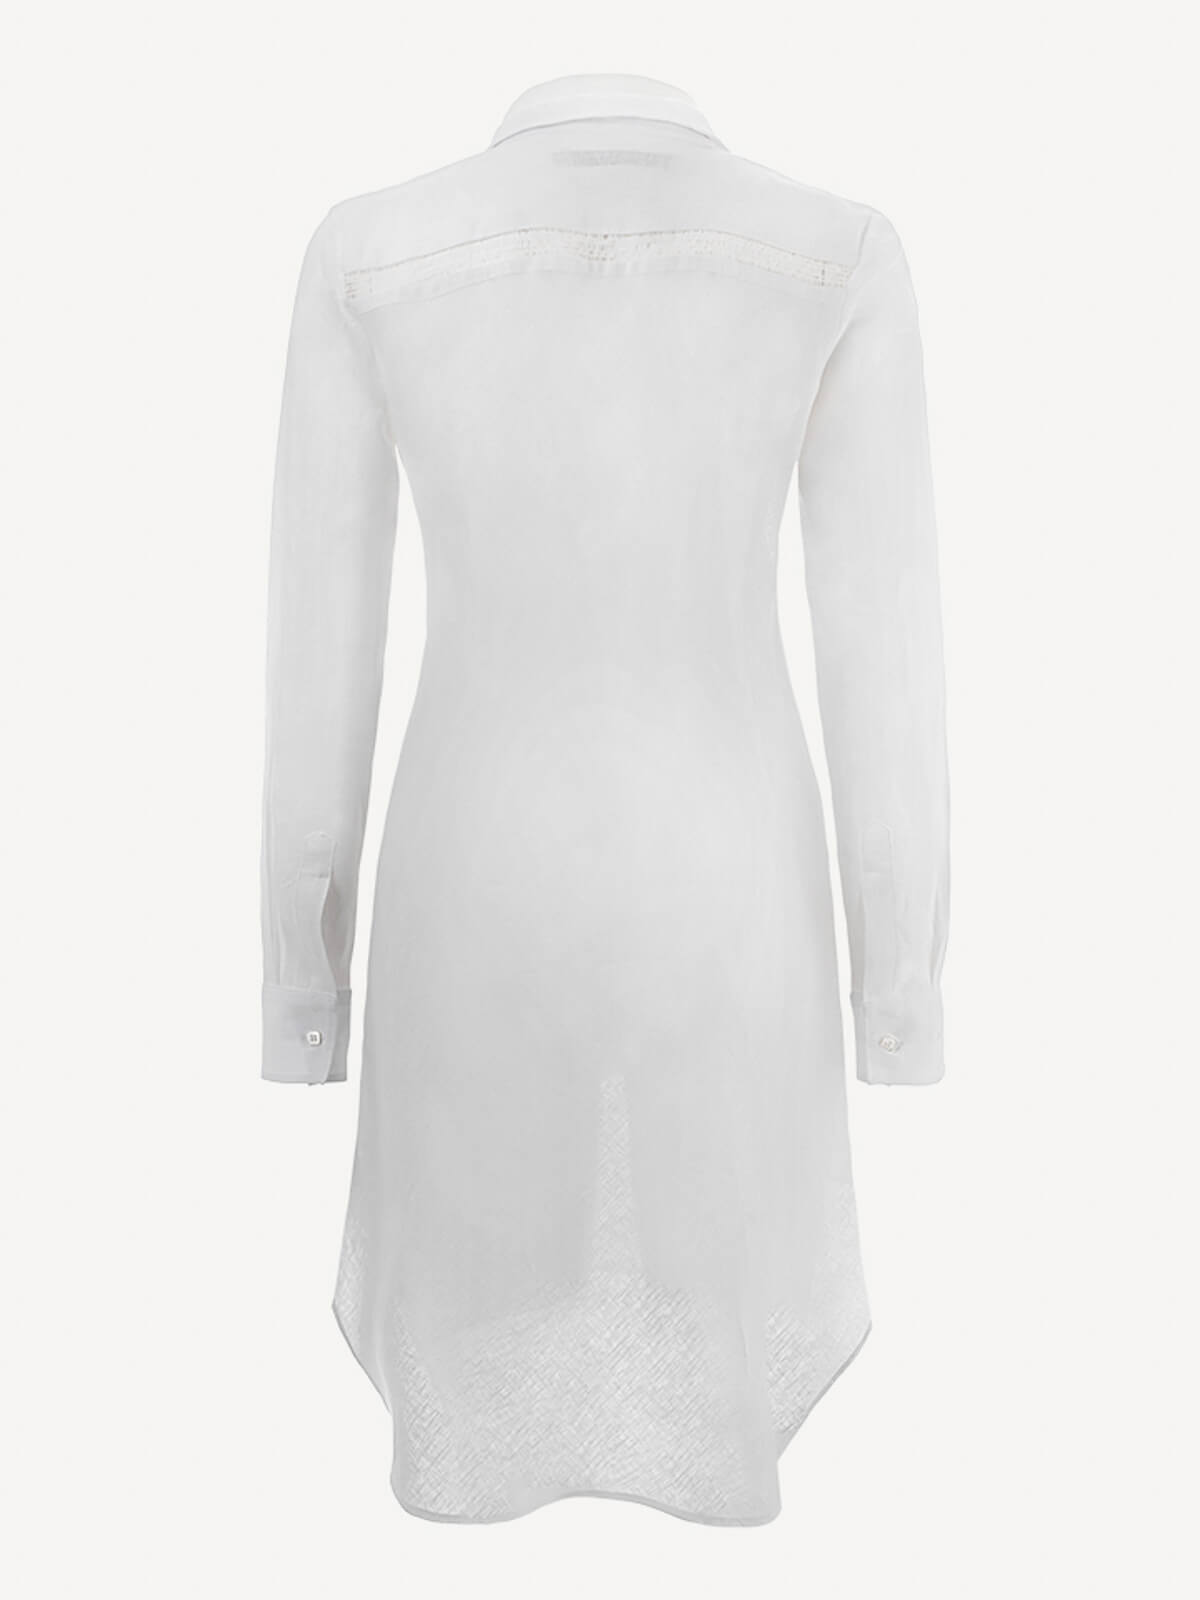 Camicia Royal 100% Capri white linen shirt back